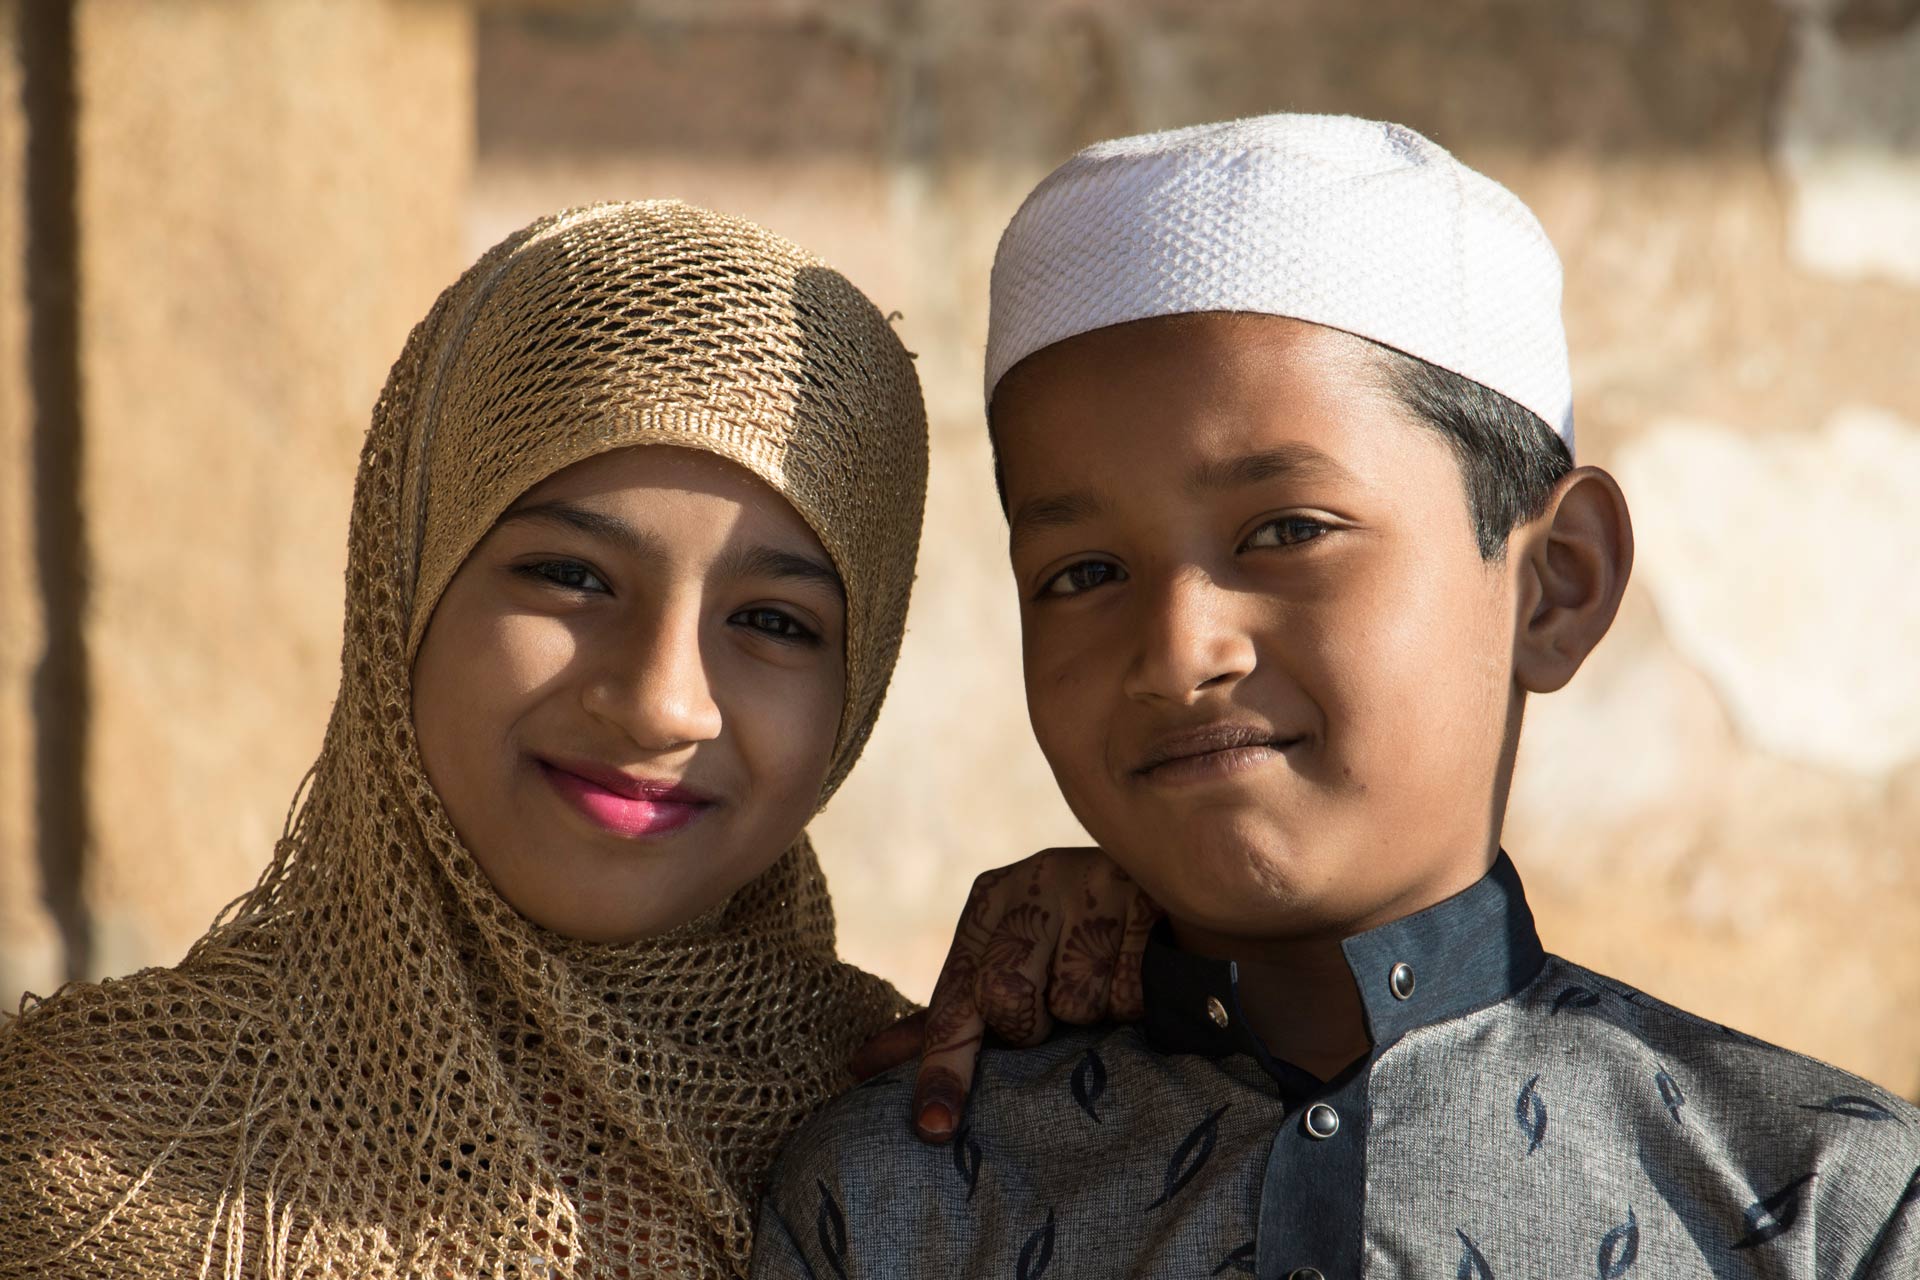 Muslim children Gujarat, India